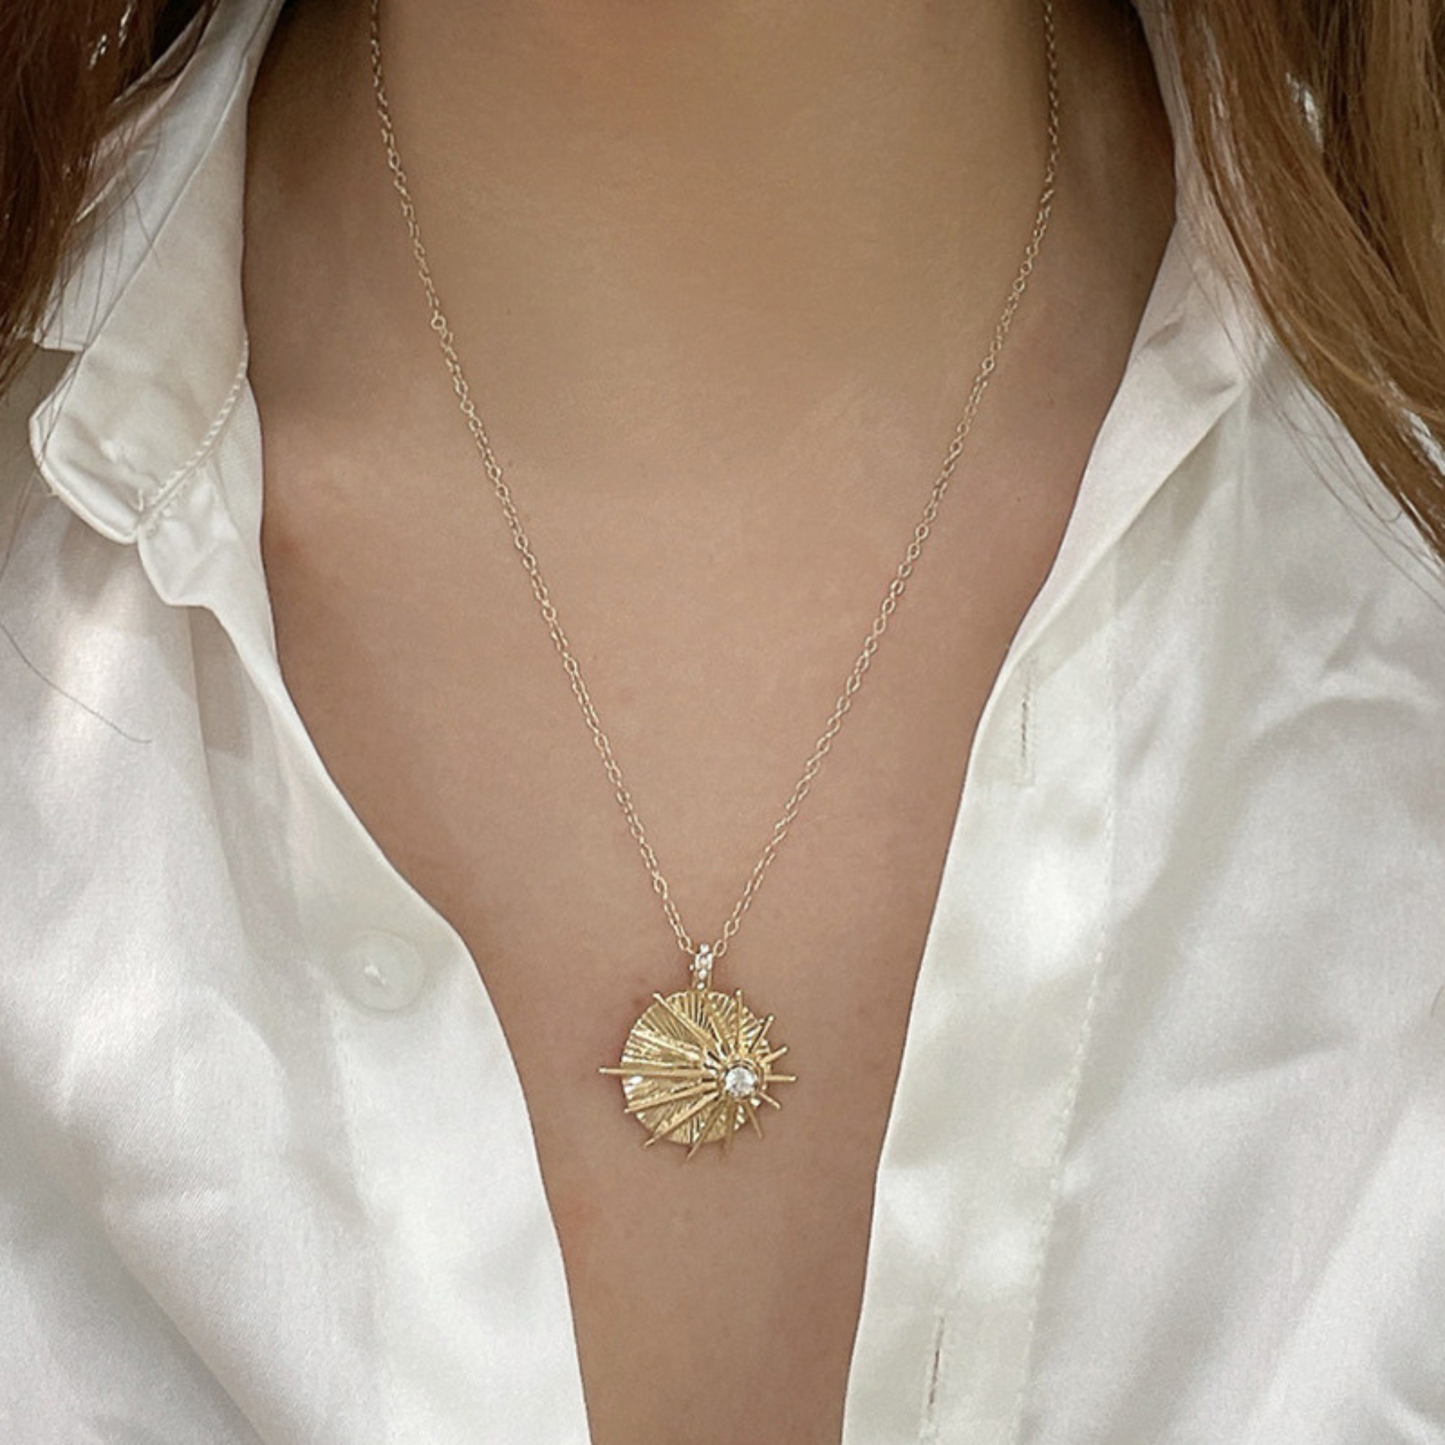 Minimalist Celestial Dainty Necklace for Women